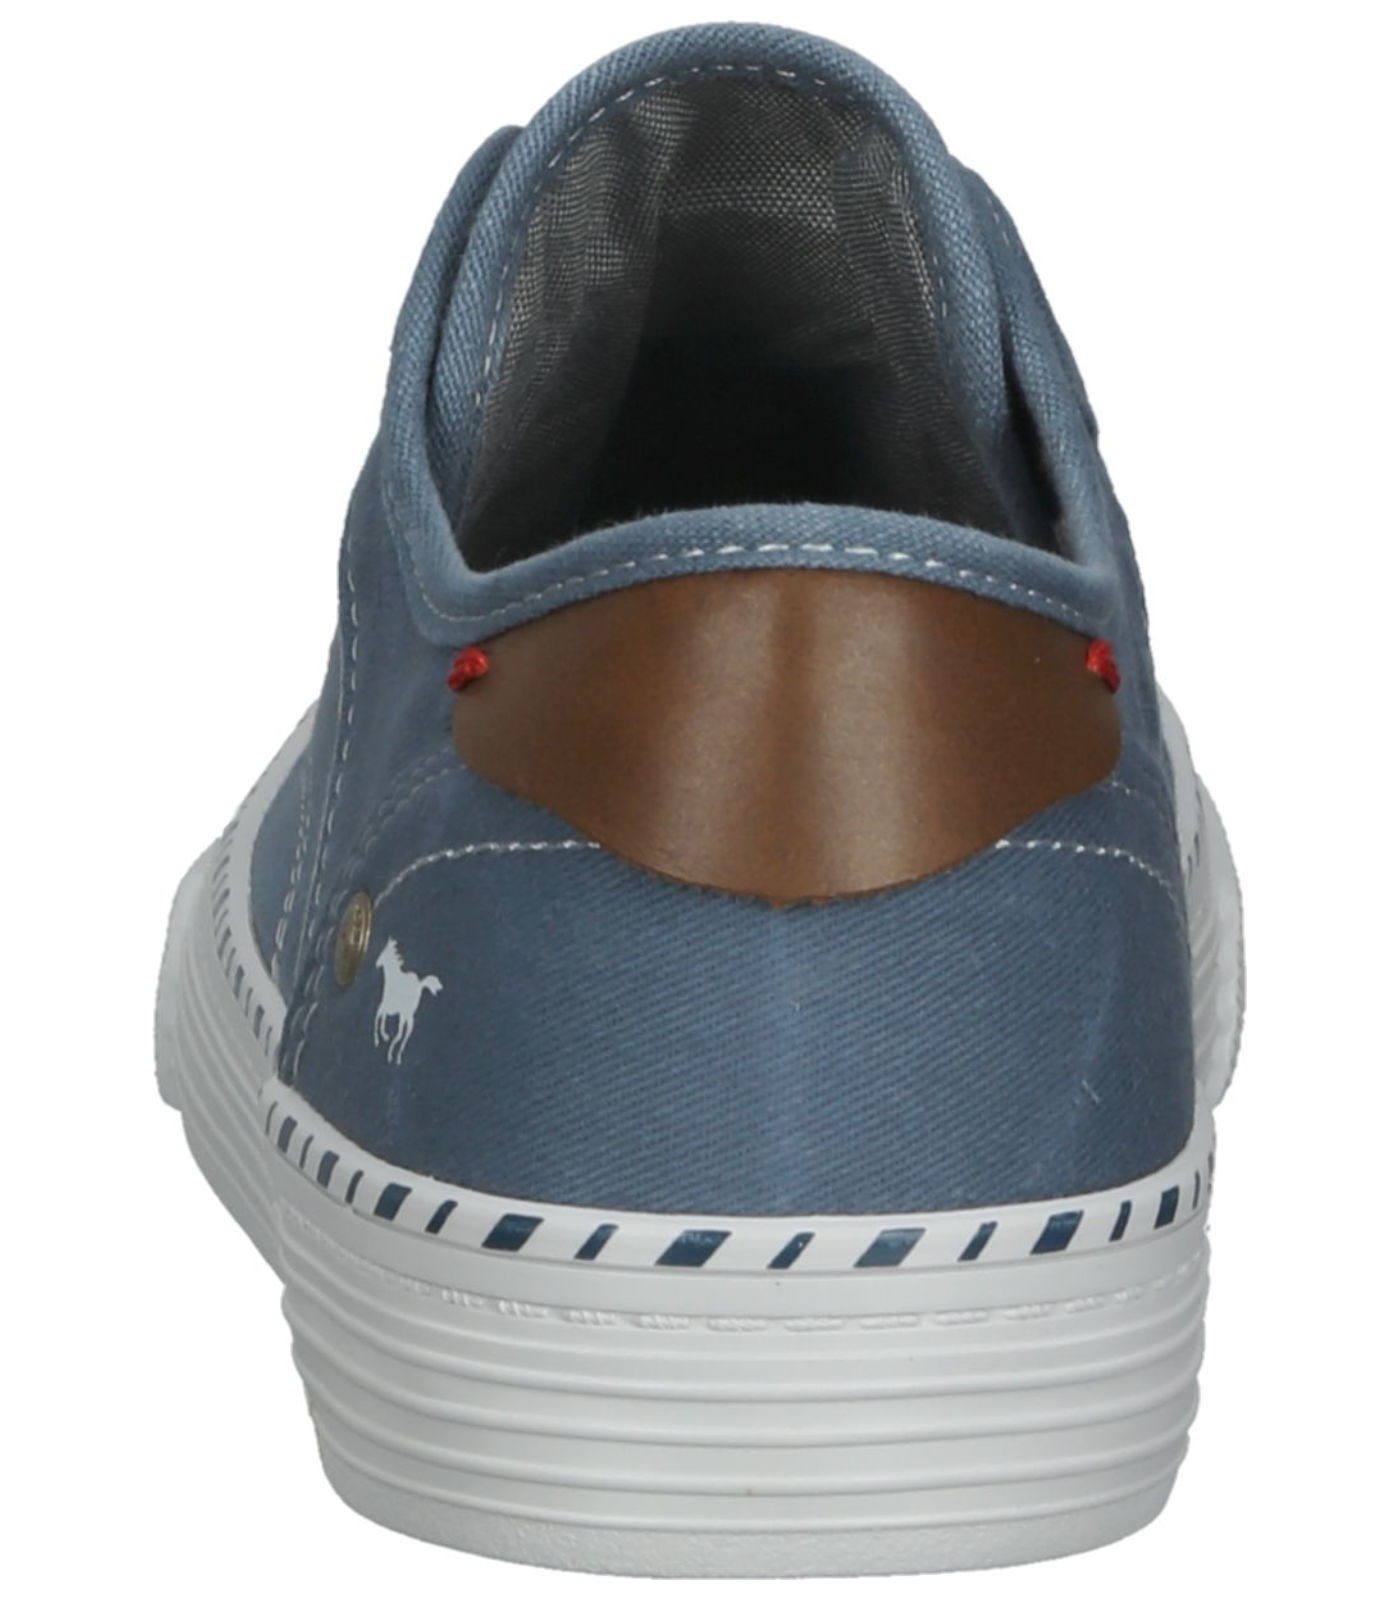 Mustang Shoes Halbschuhe Textil Slipper Blau MUSTANG